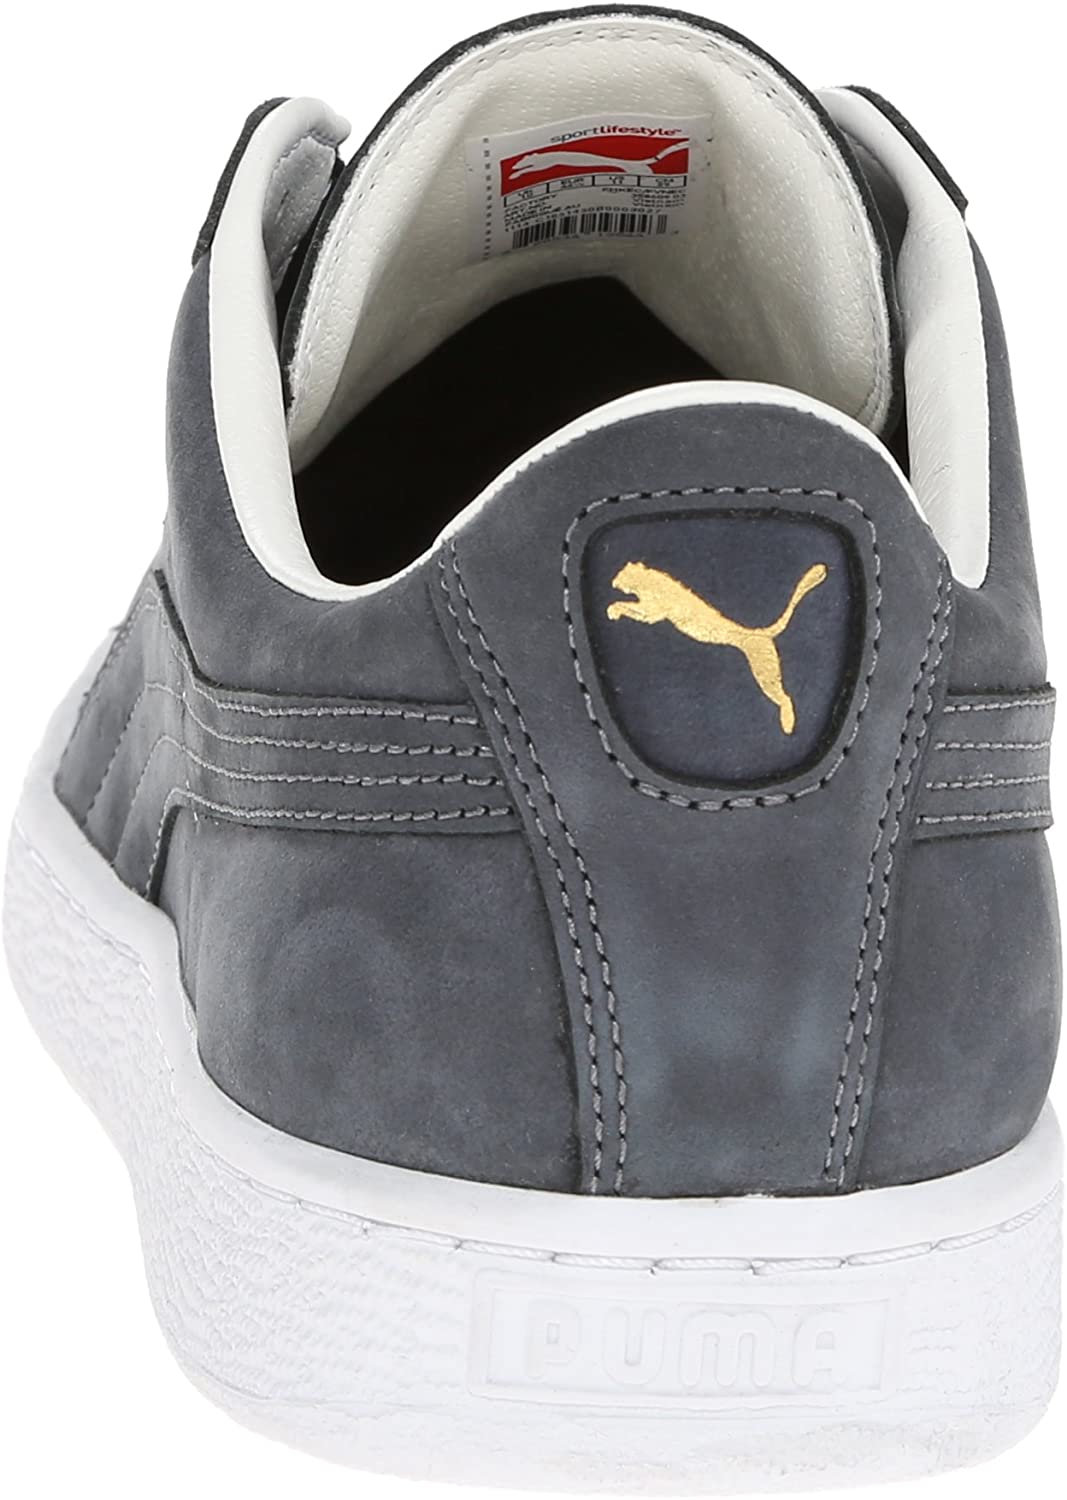 Puma Men's Basket Citi Series Nubuck Sneaker Fashion Shoes, Grey & Khaki - image 3 of 8